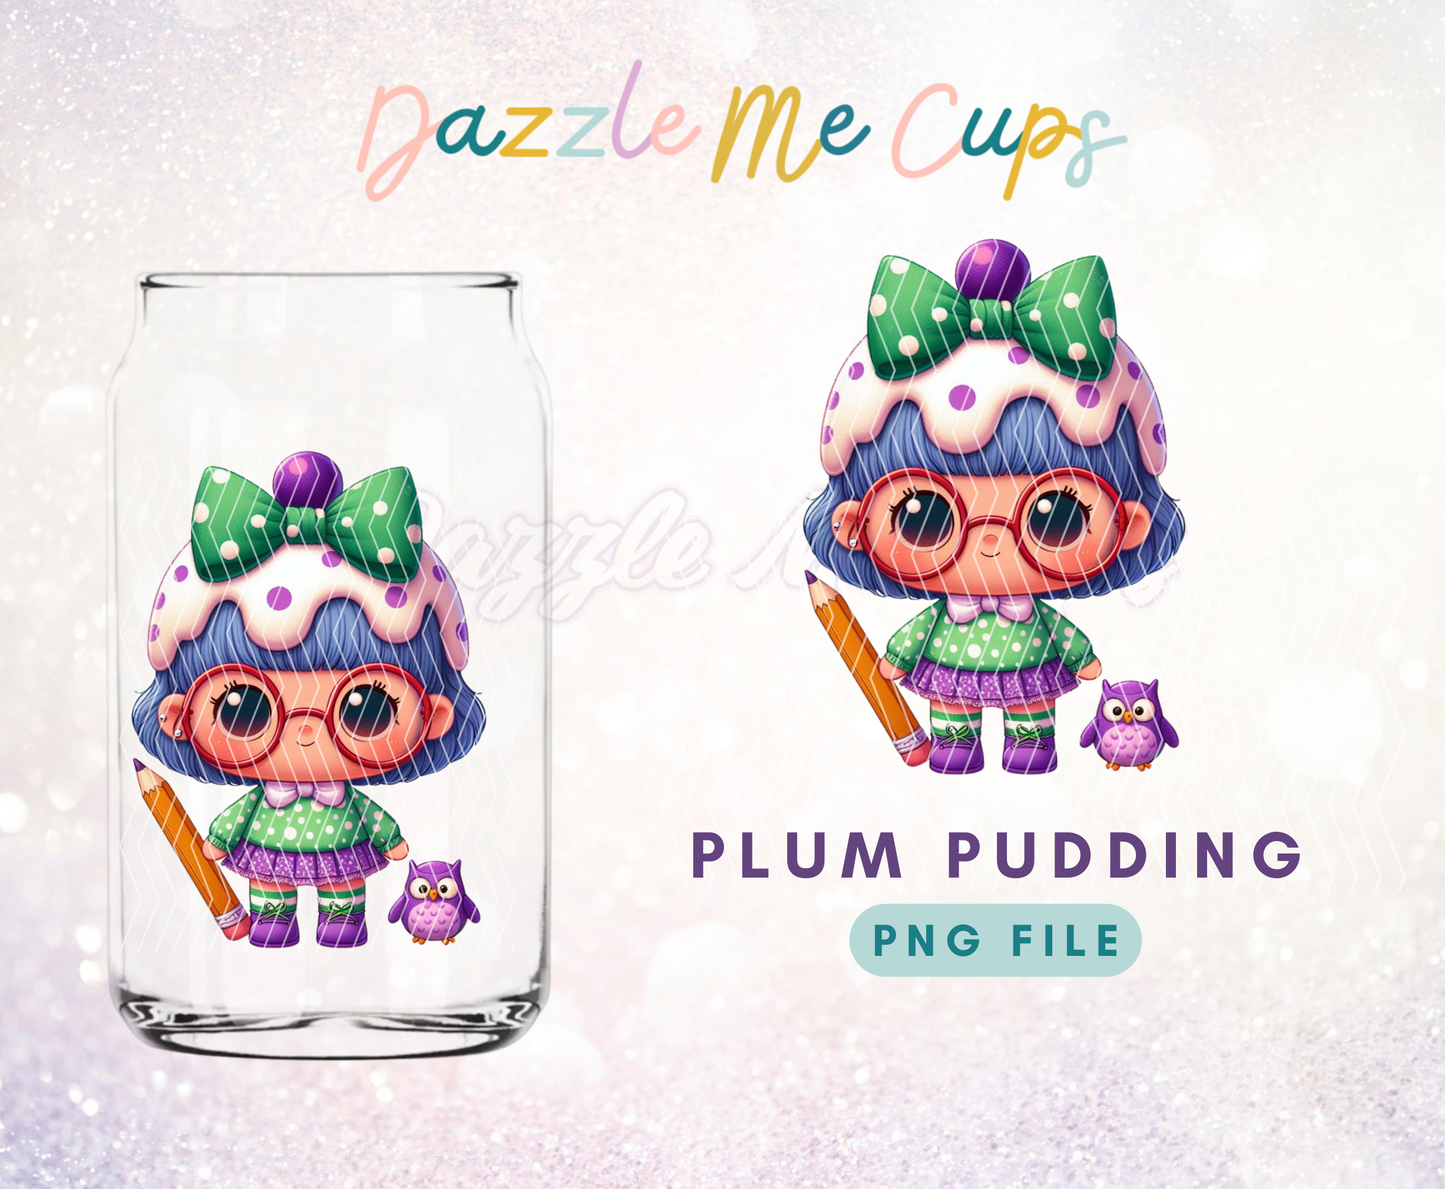 Plum pudding PNG